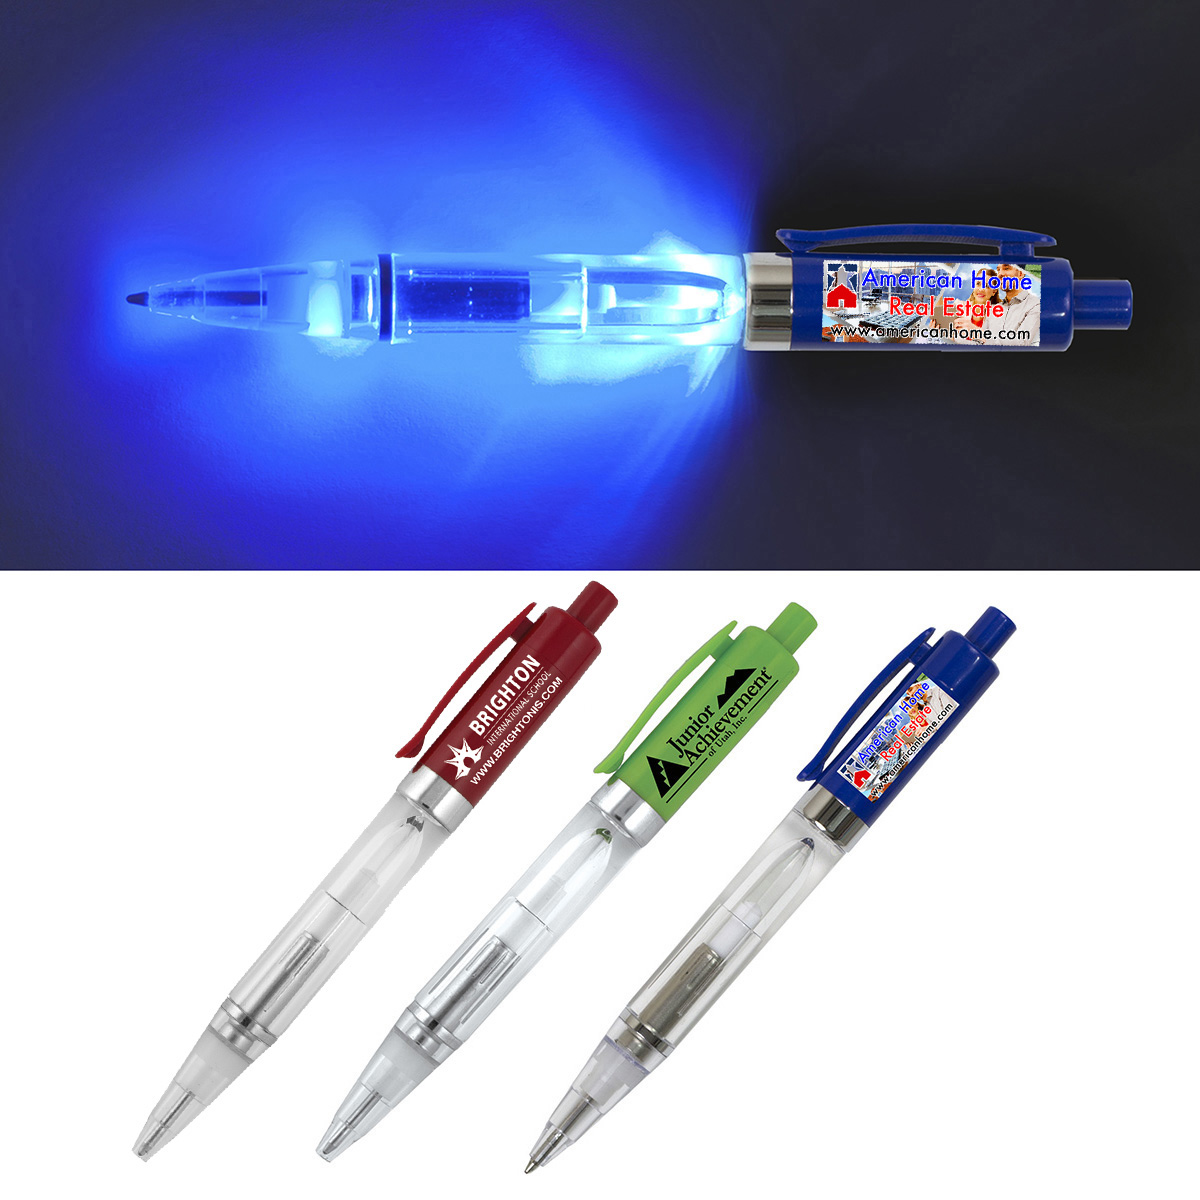 "VICENTE" Light Up Pen with BLUE Color LED Light